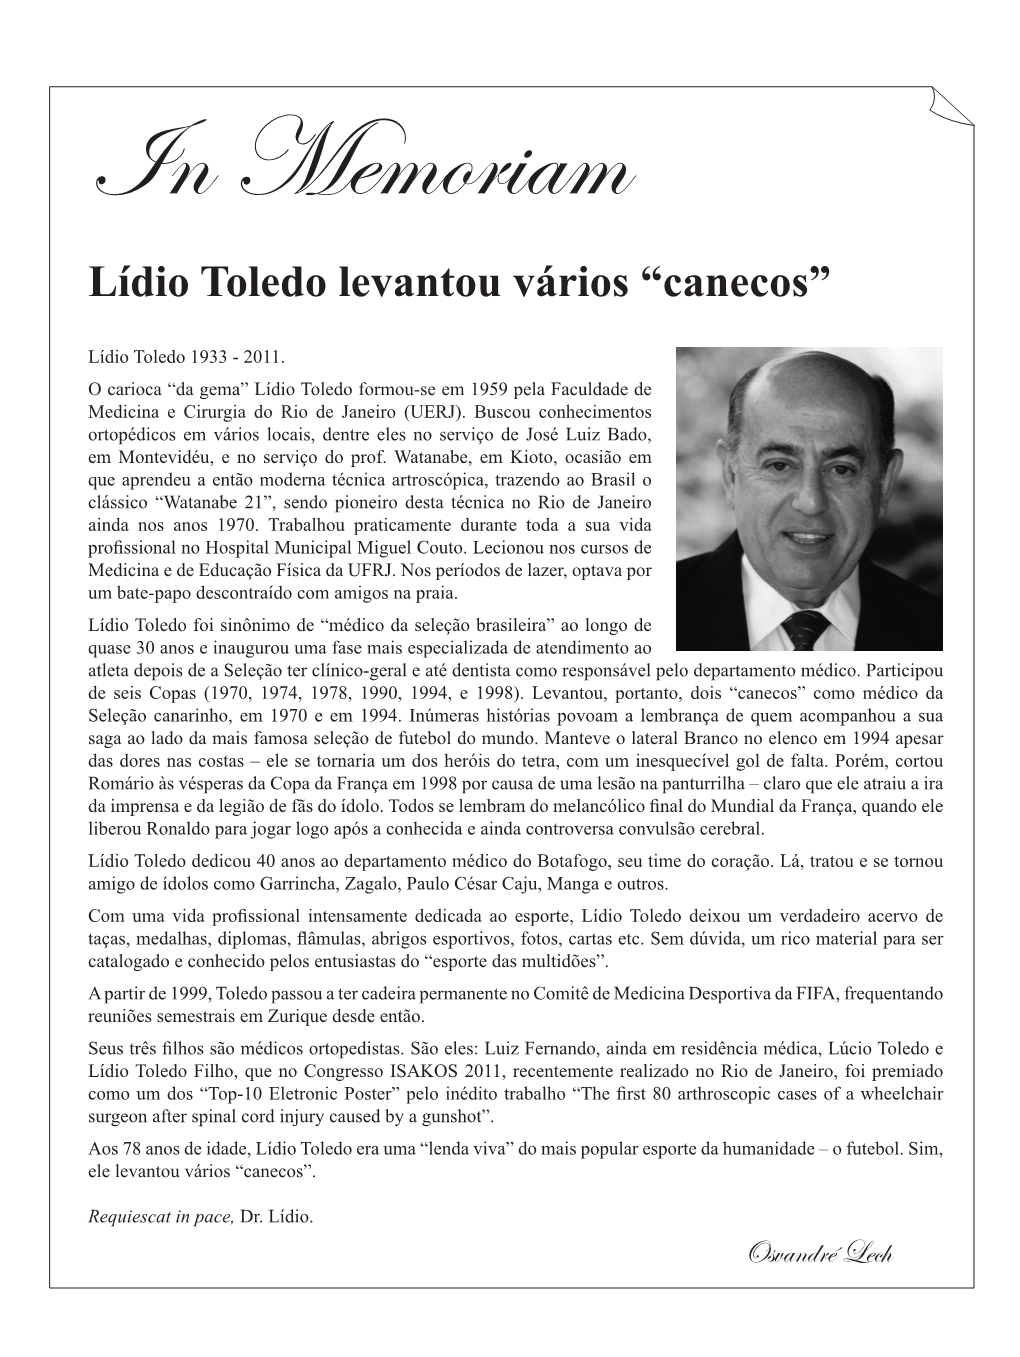 In Memoriam Lídio Toledo Levantou Vários “Canecos”